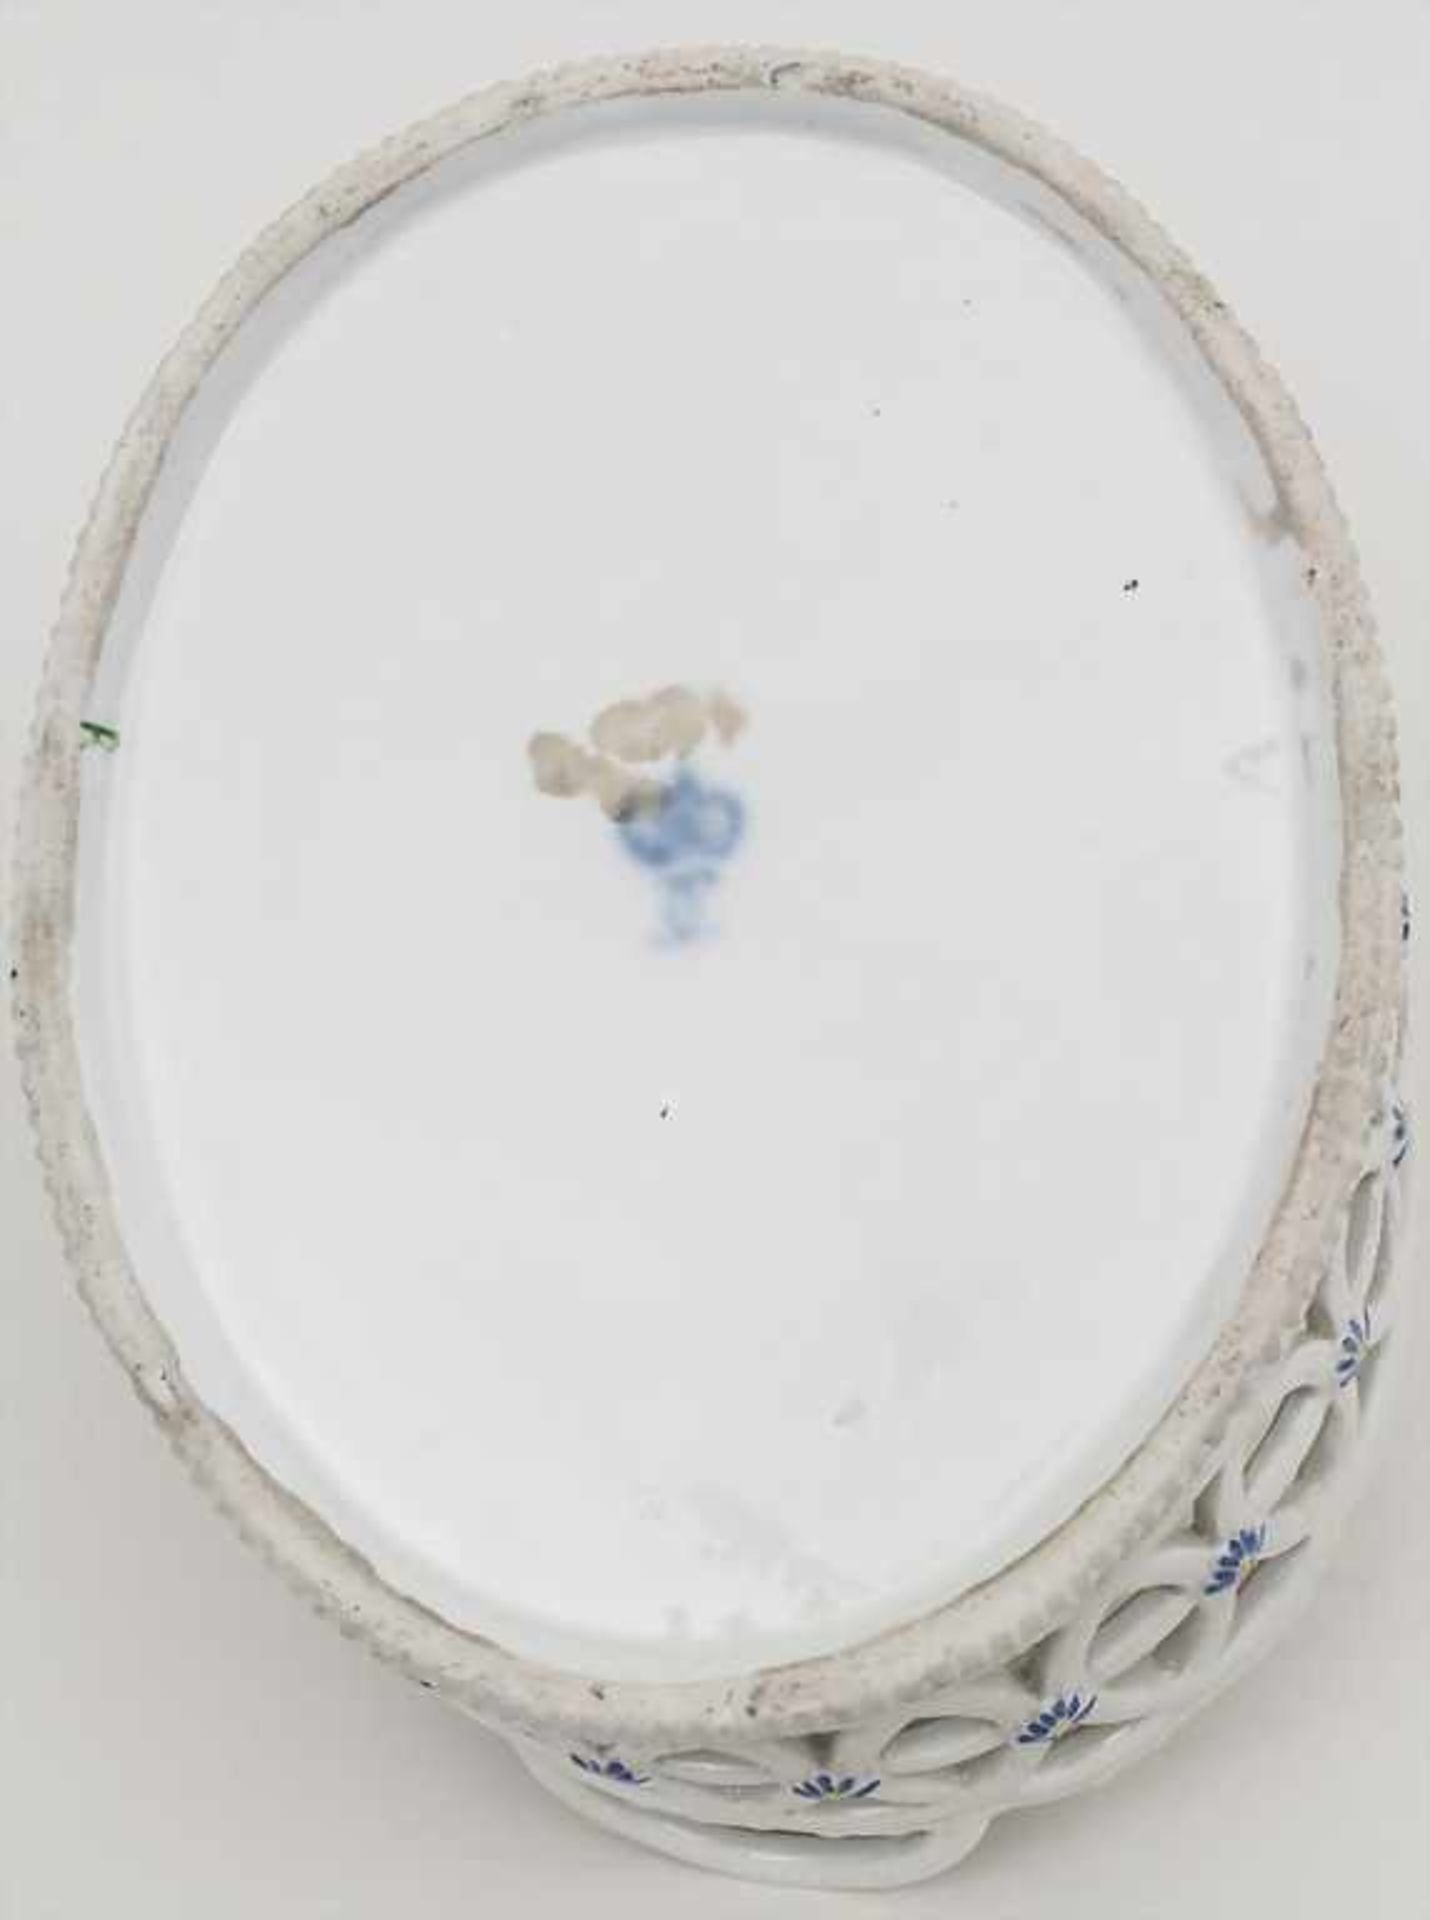 Ovale Korbschale / An oval basket, Ludwigsburg, um 1750 Material: Porzellan, polychrom bemalt, - Bild 3 aus 3